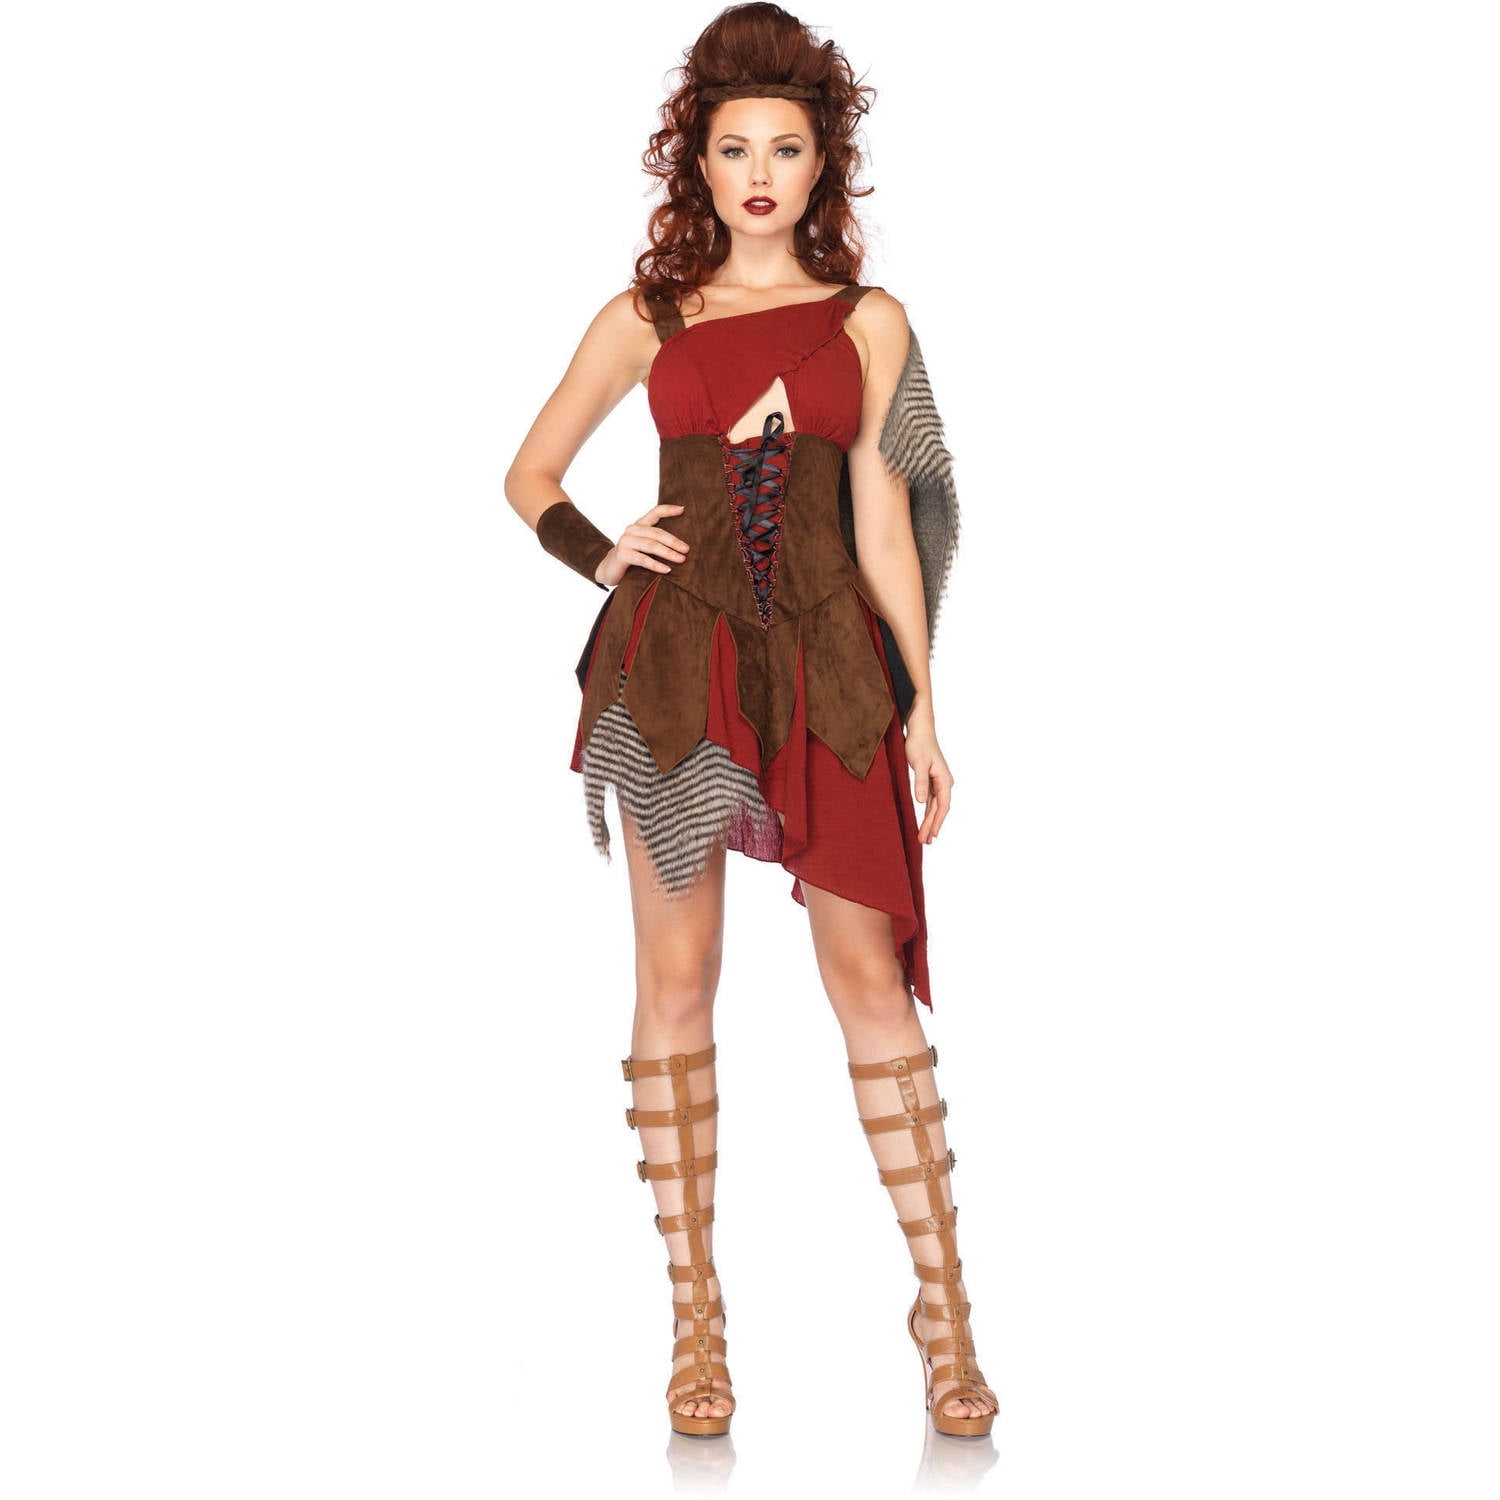 Leg Avenue Diva Dictator Halloween Costume Walmart.com